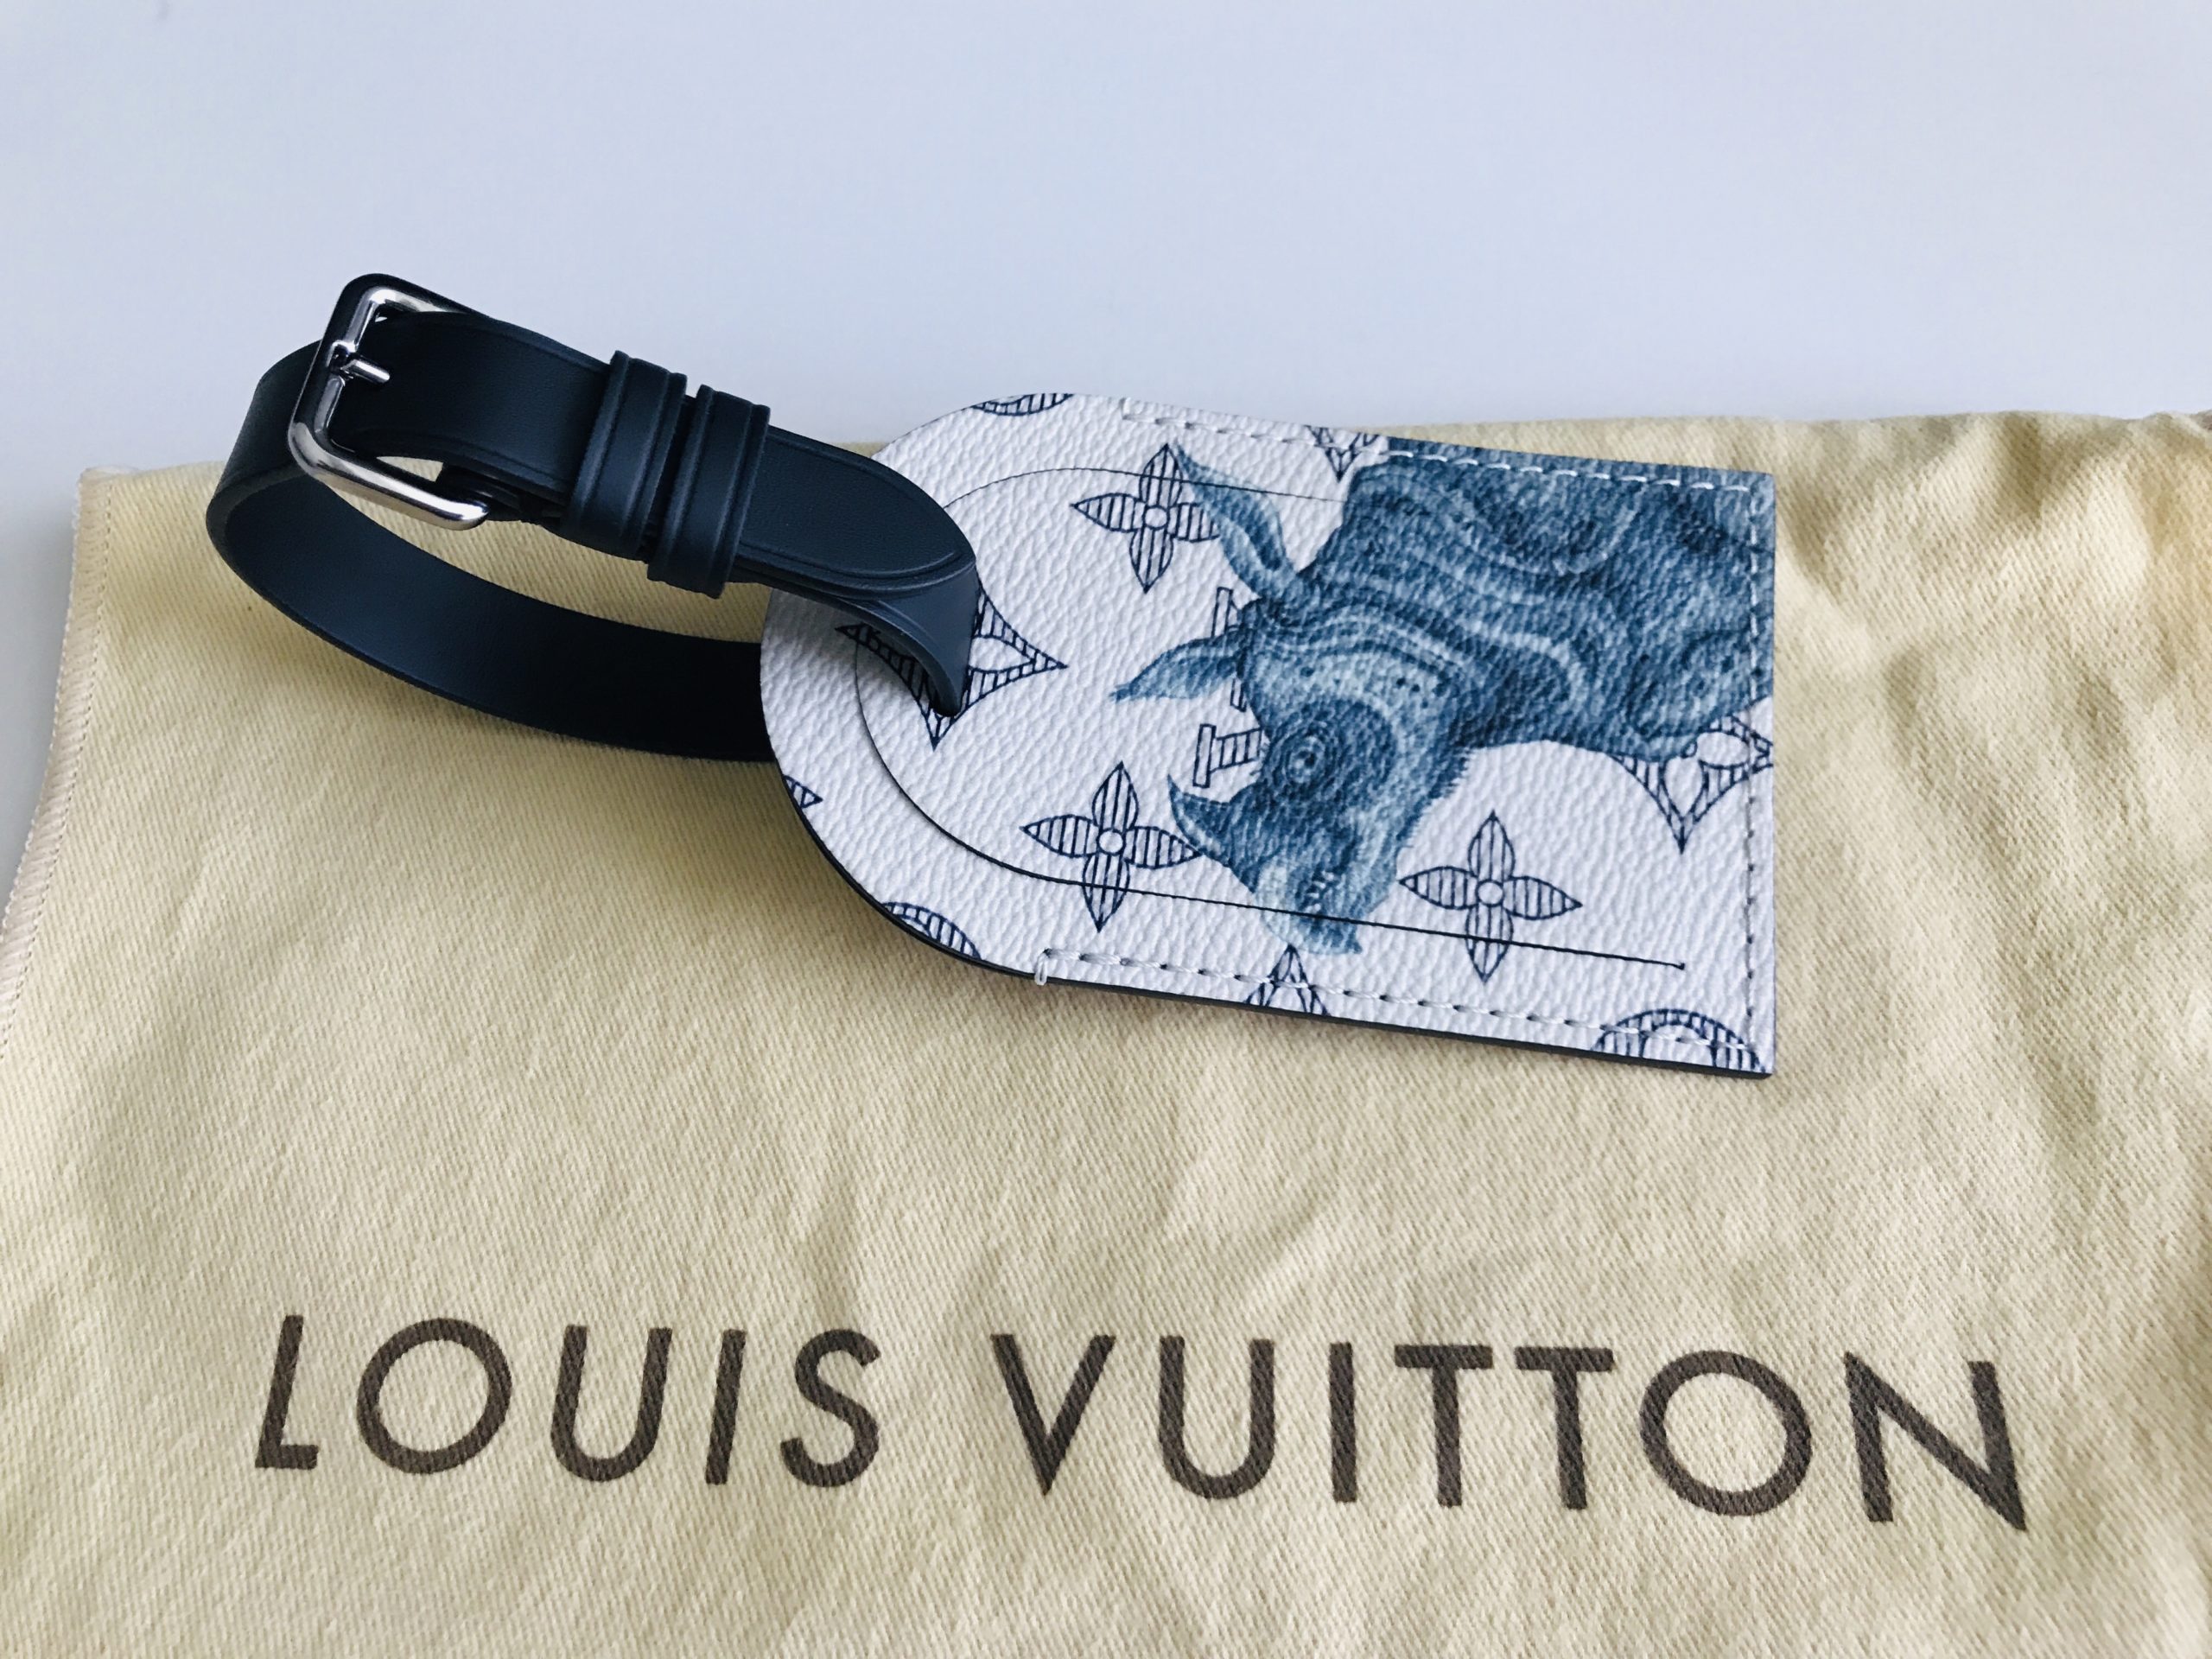 Louis Vuitton Chapman Collaboration Savanna White Rhino Name Tag